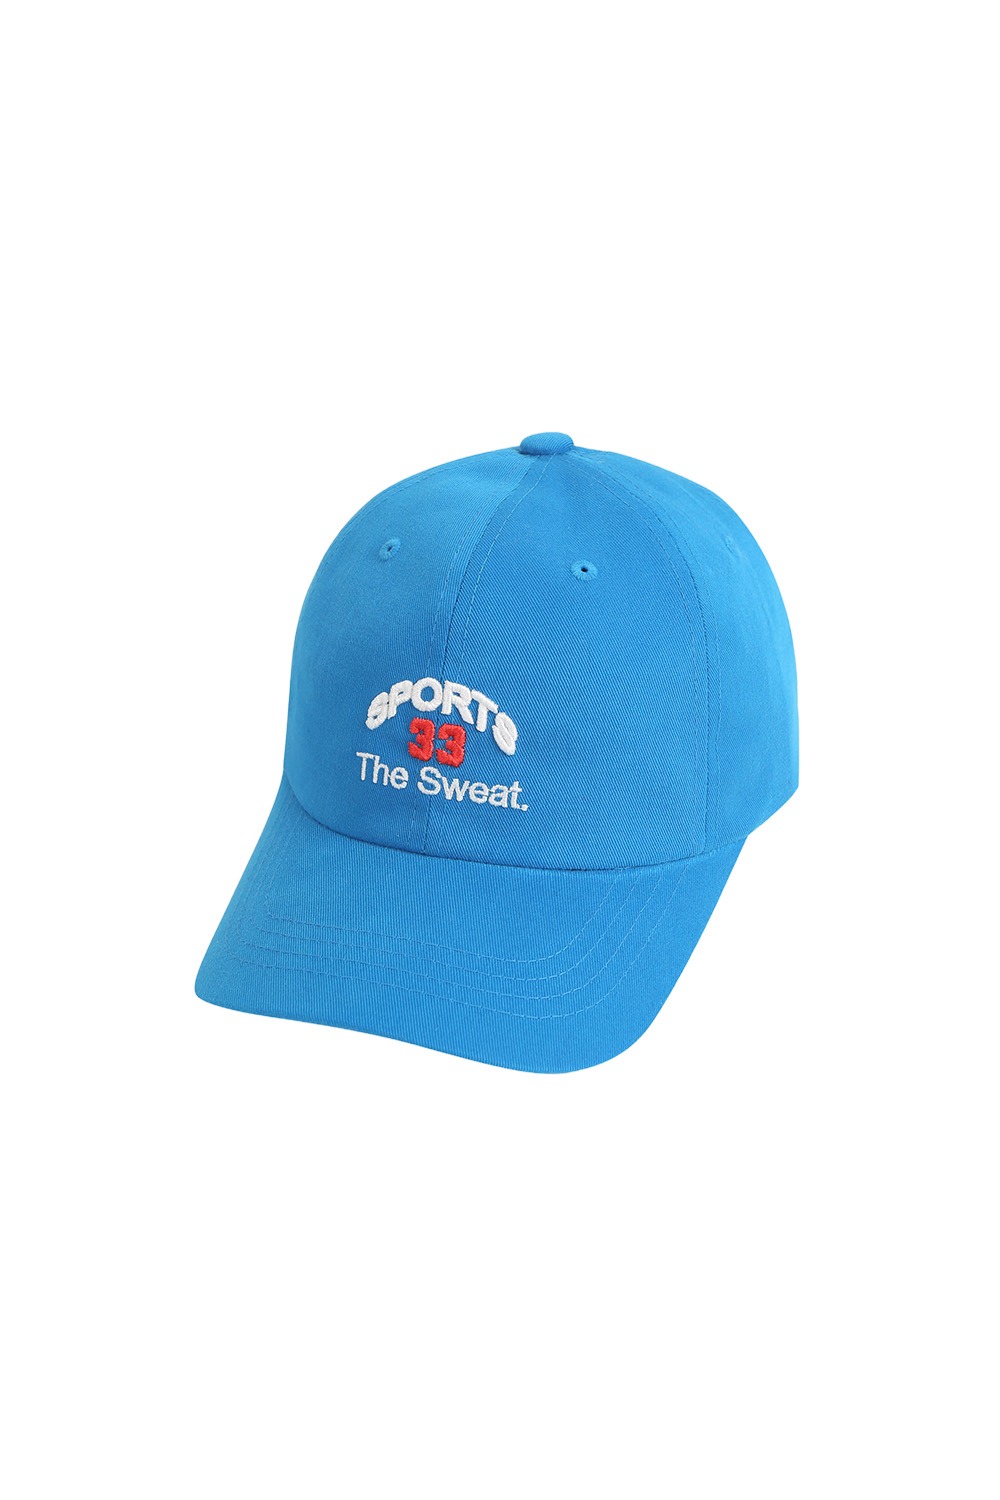 Sports 33 Ball Cap (BLUE) RICHEZ